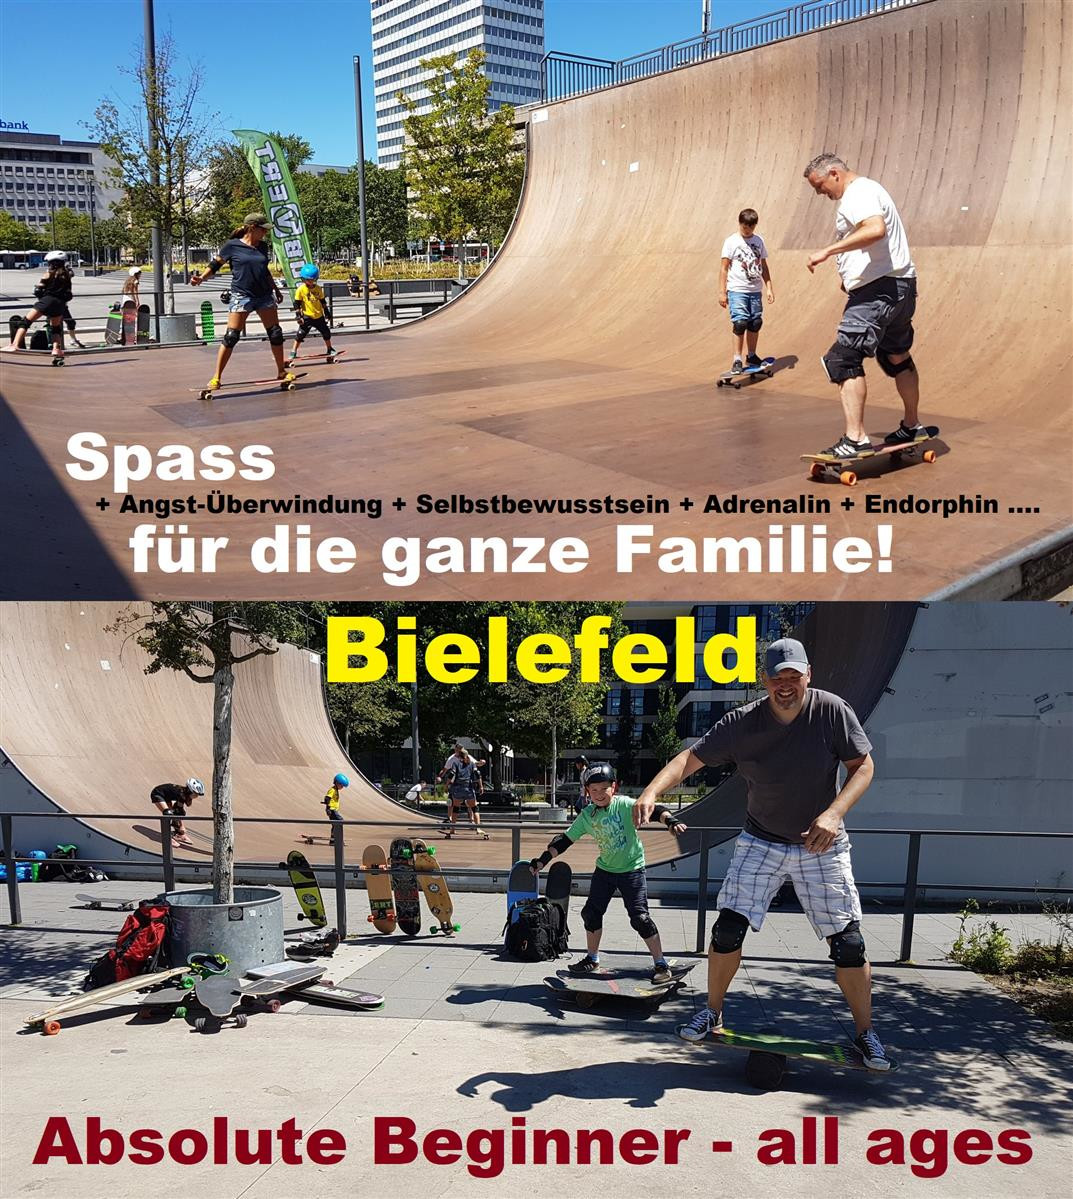 19.05.24 Skate-+Longboardkurs STEP 1 Bielefeld 15:00 - 18:00  Uhr